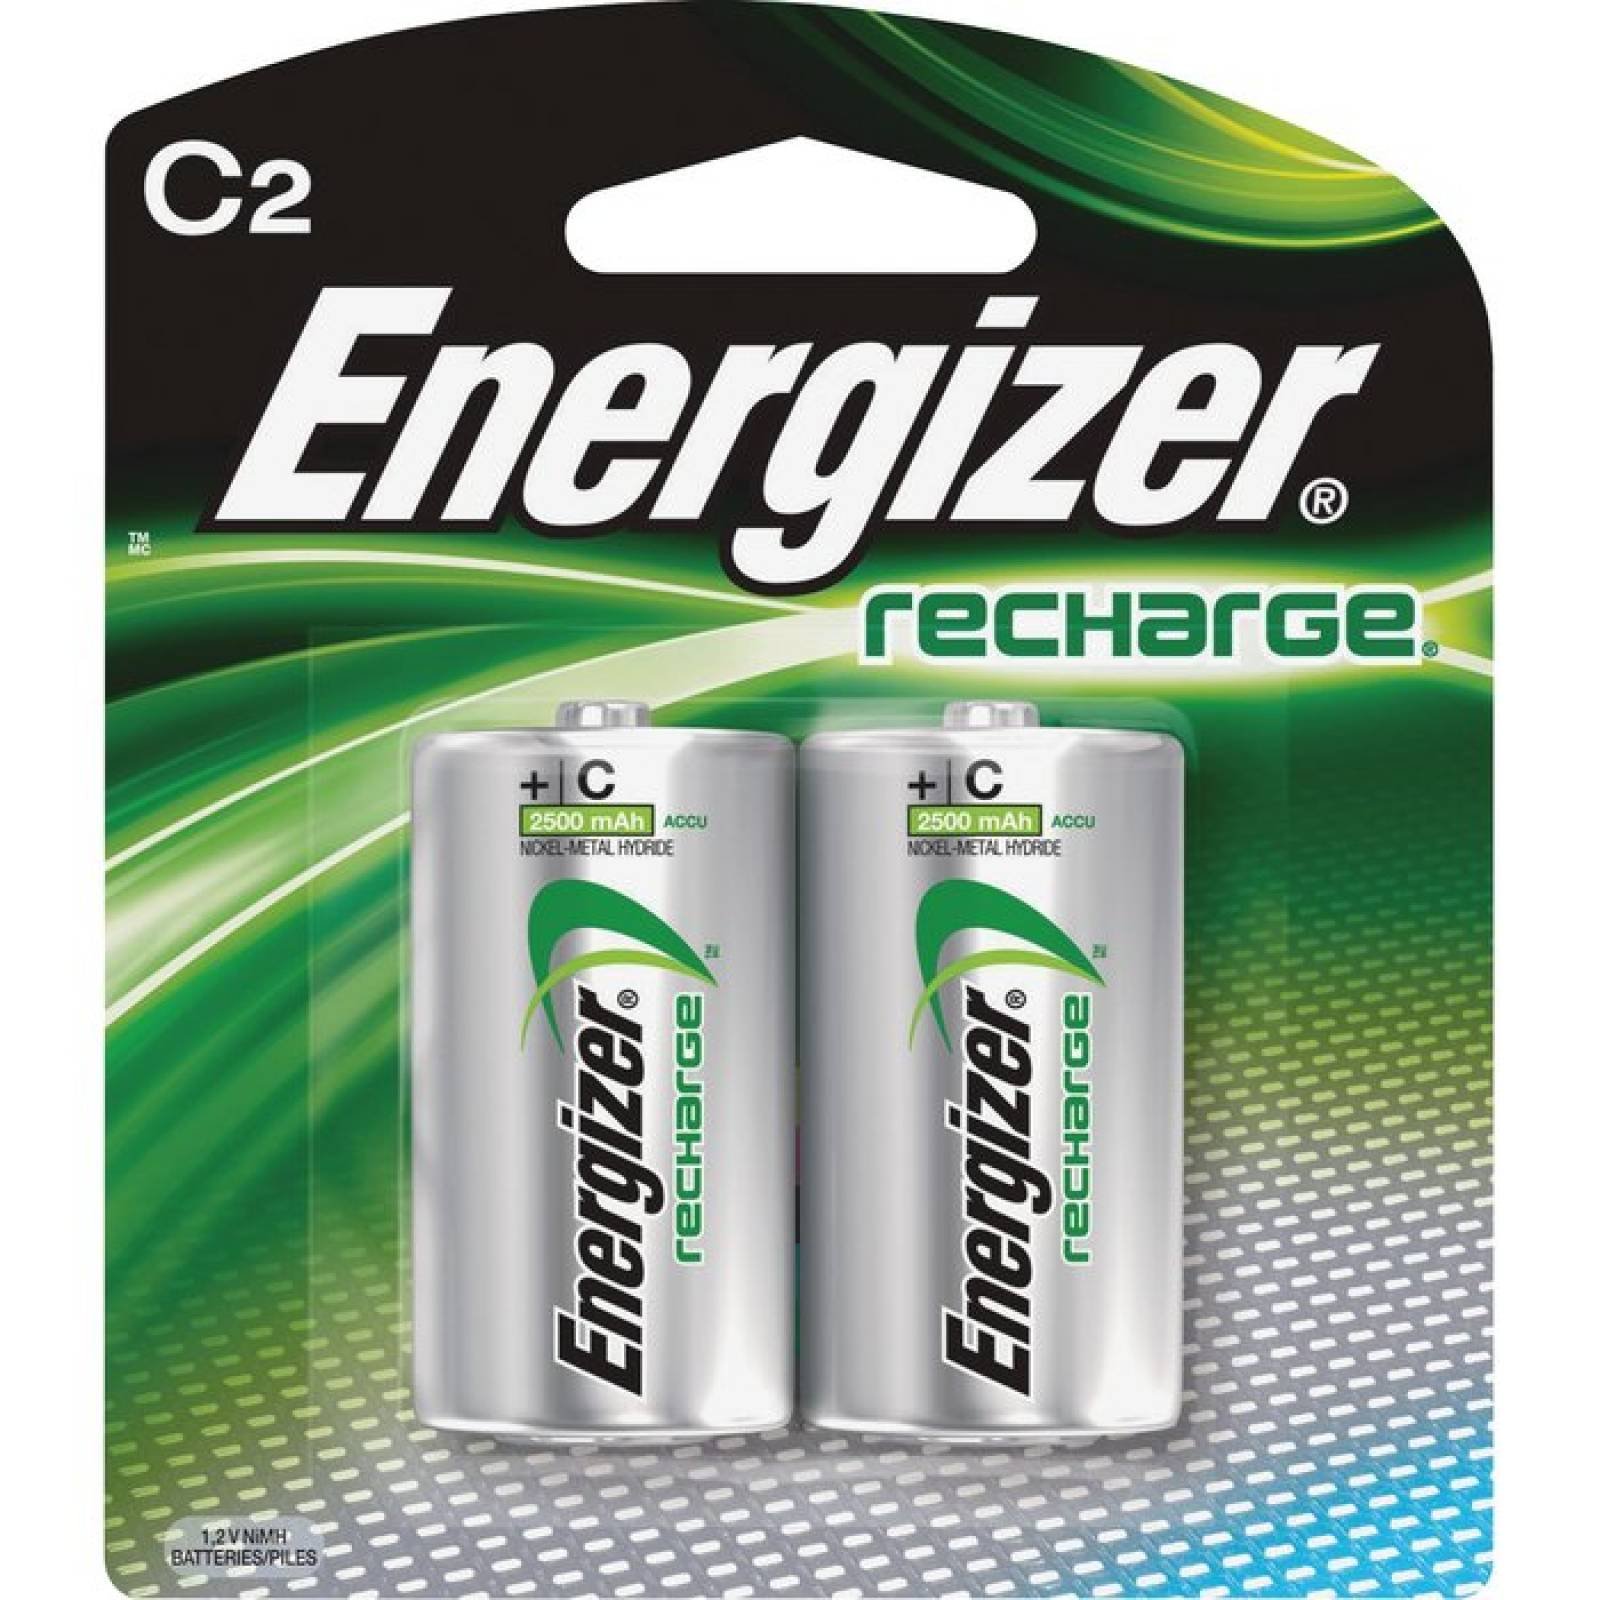 Batera de uso general Energizer